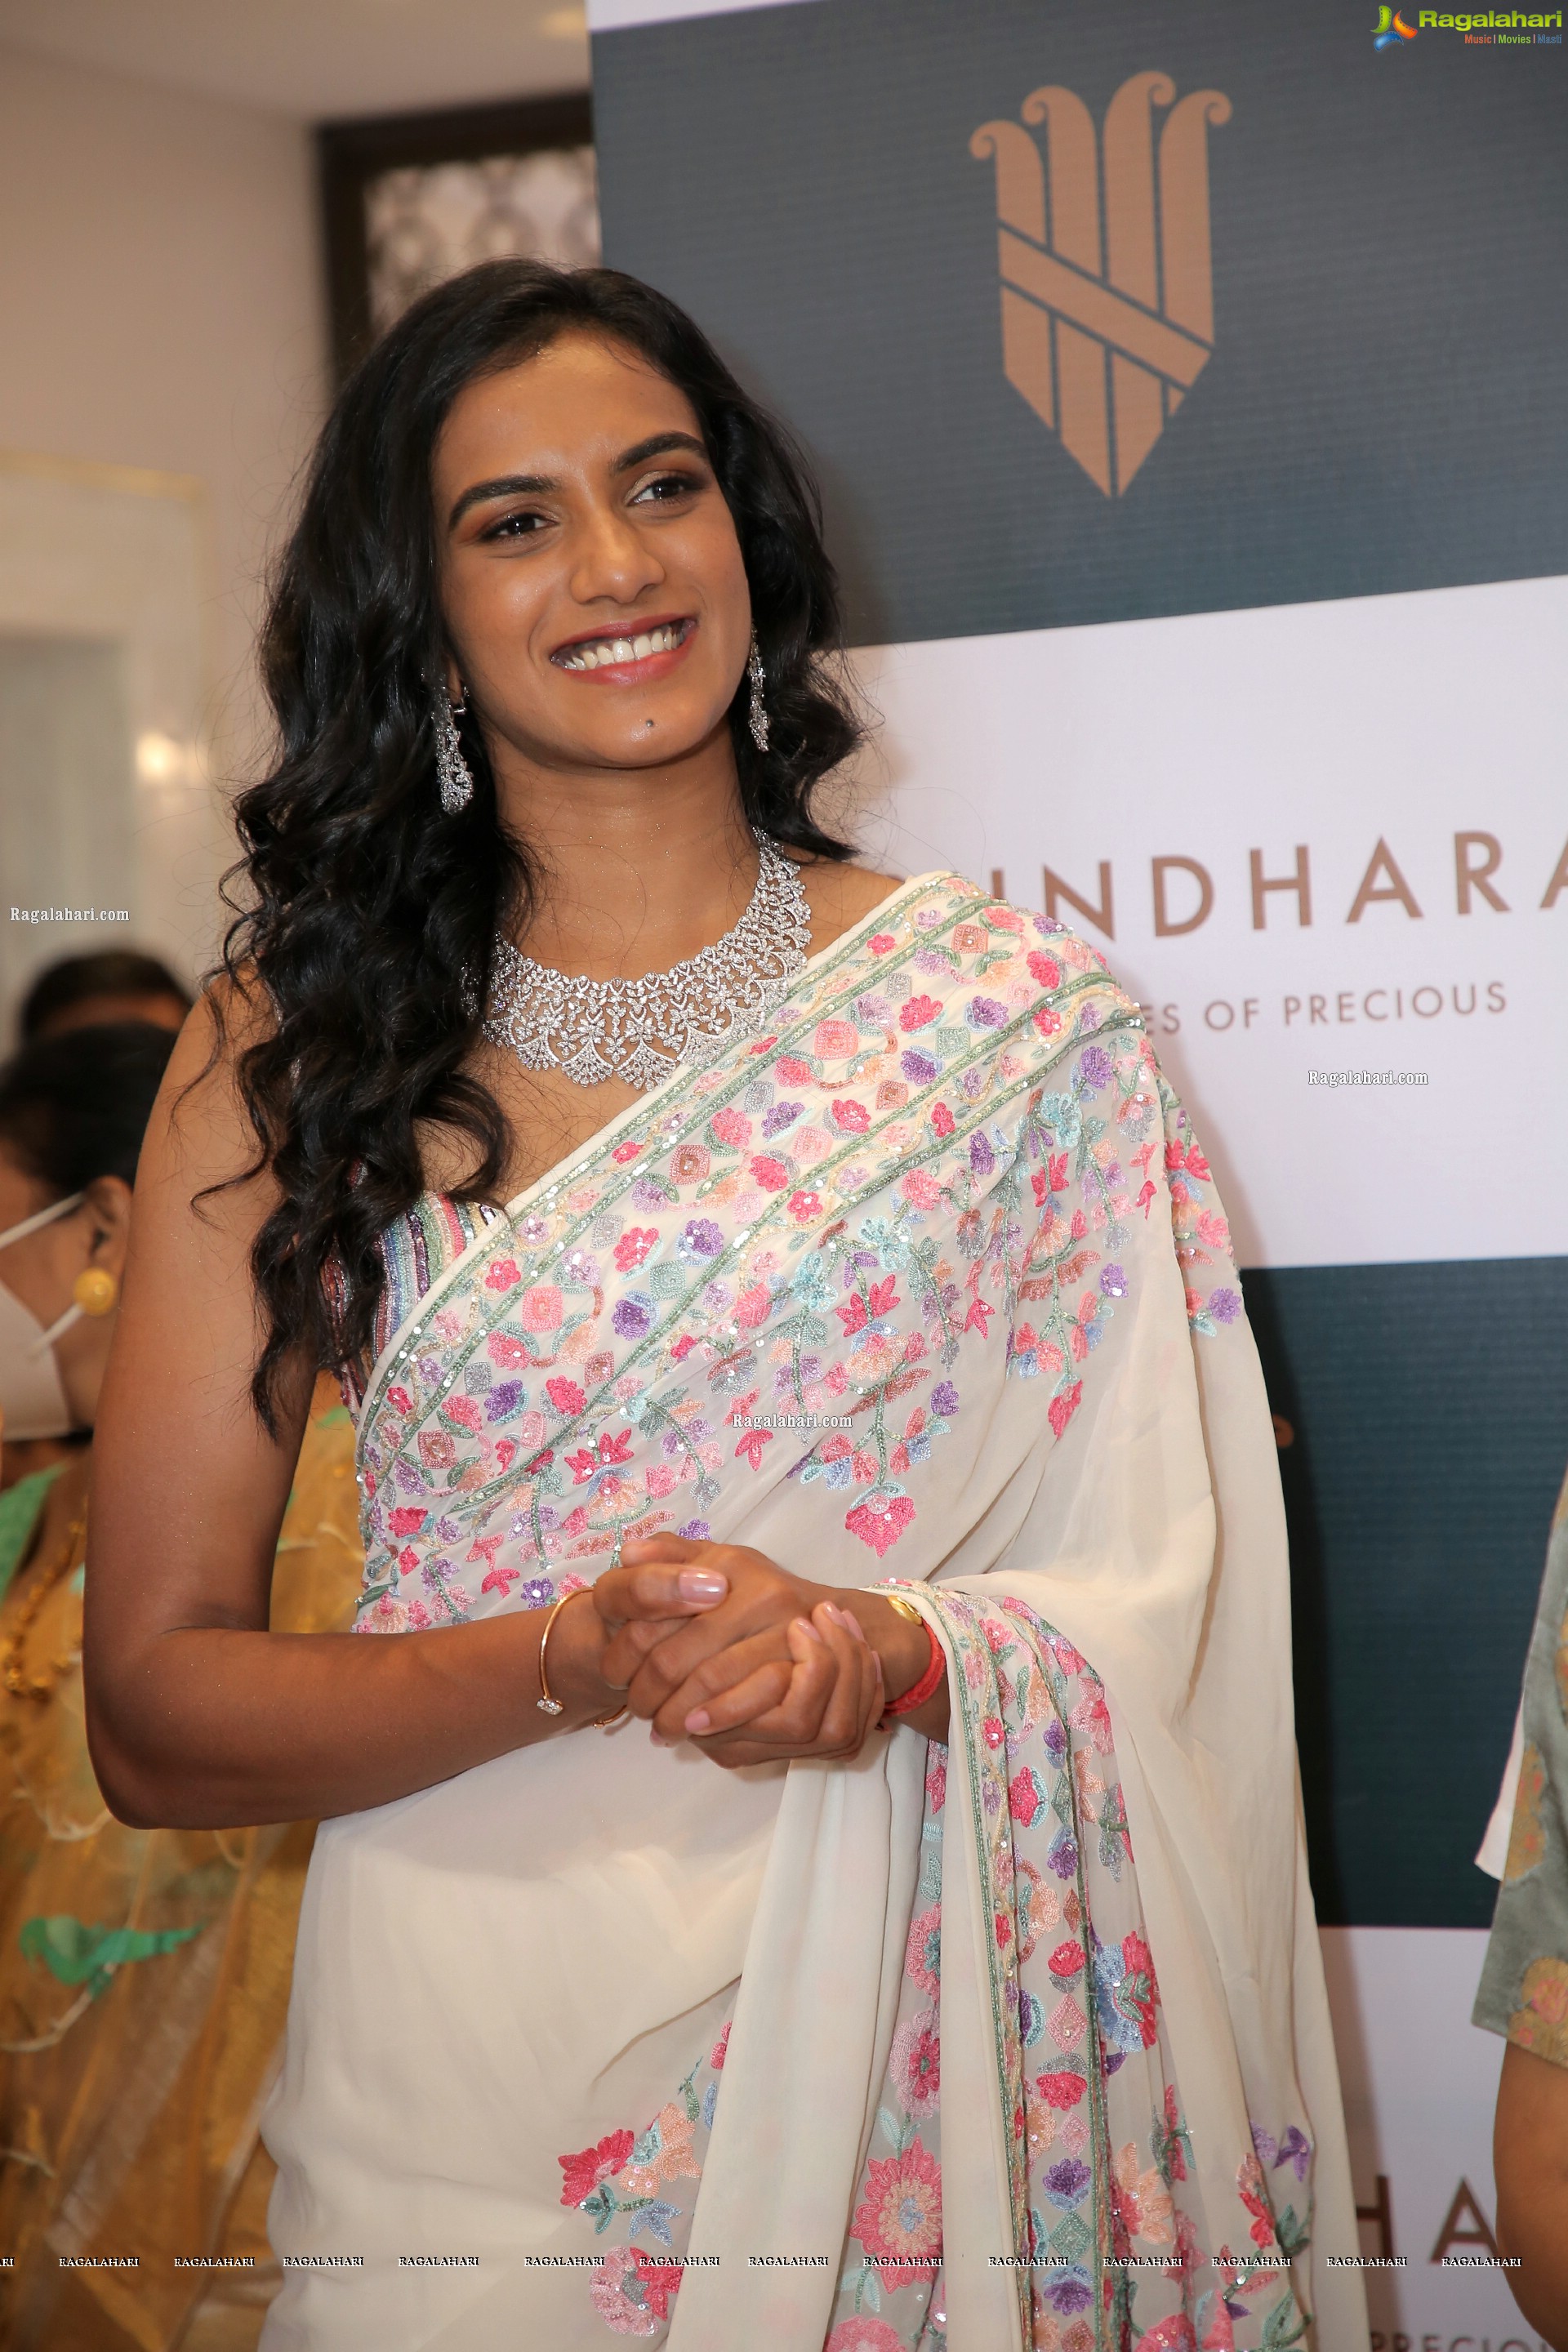 PV Sindhu at Vasundhara Flagship Jewellery Store Launch, HD Photo Gallery